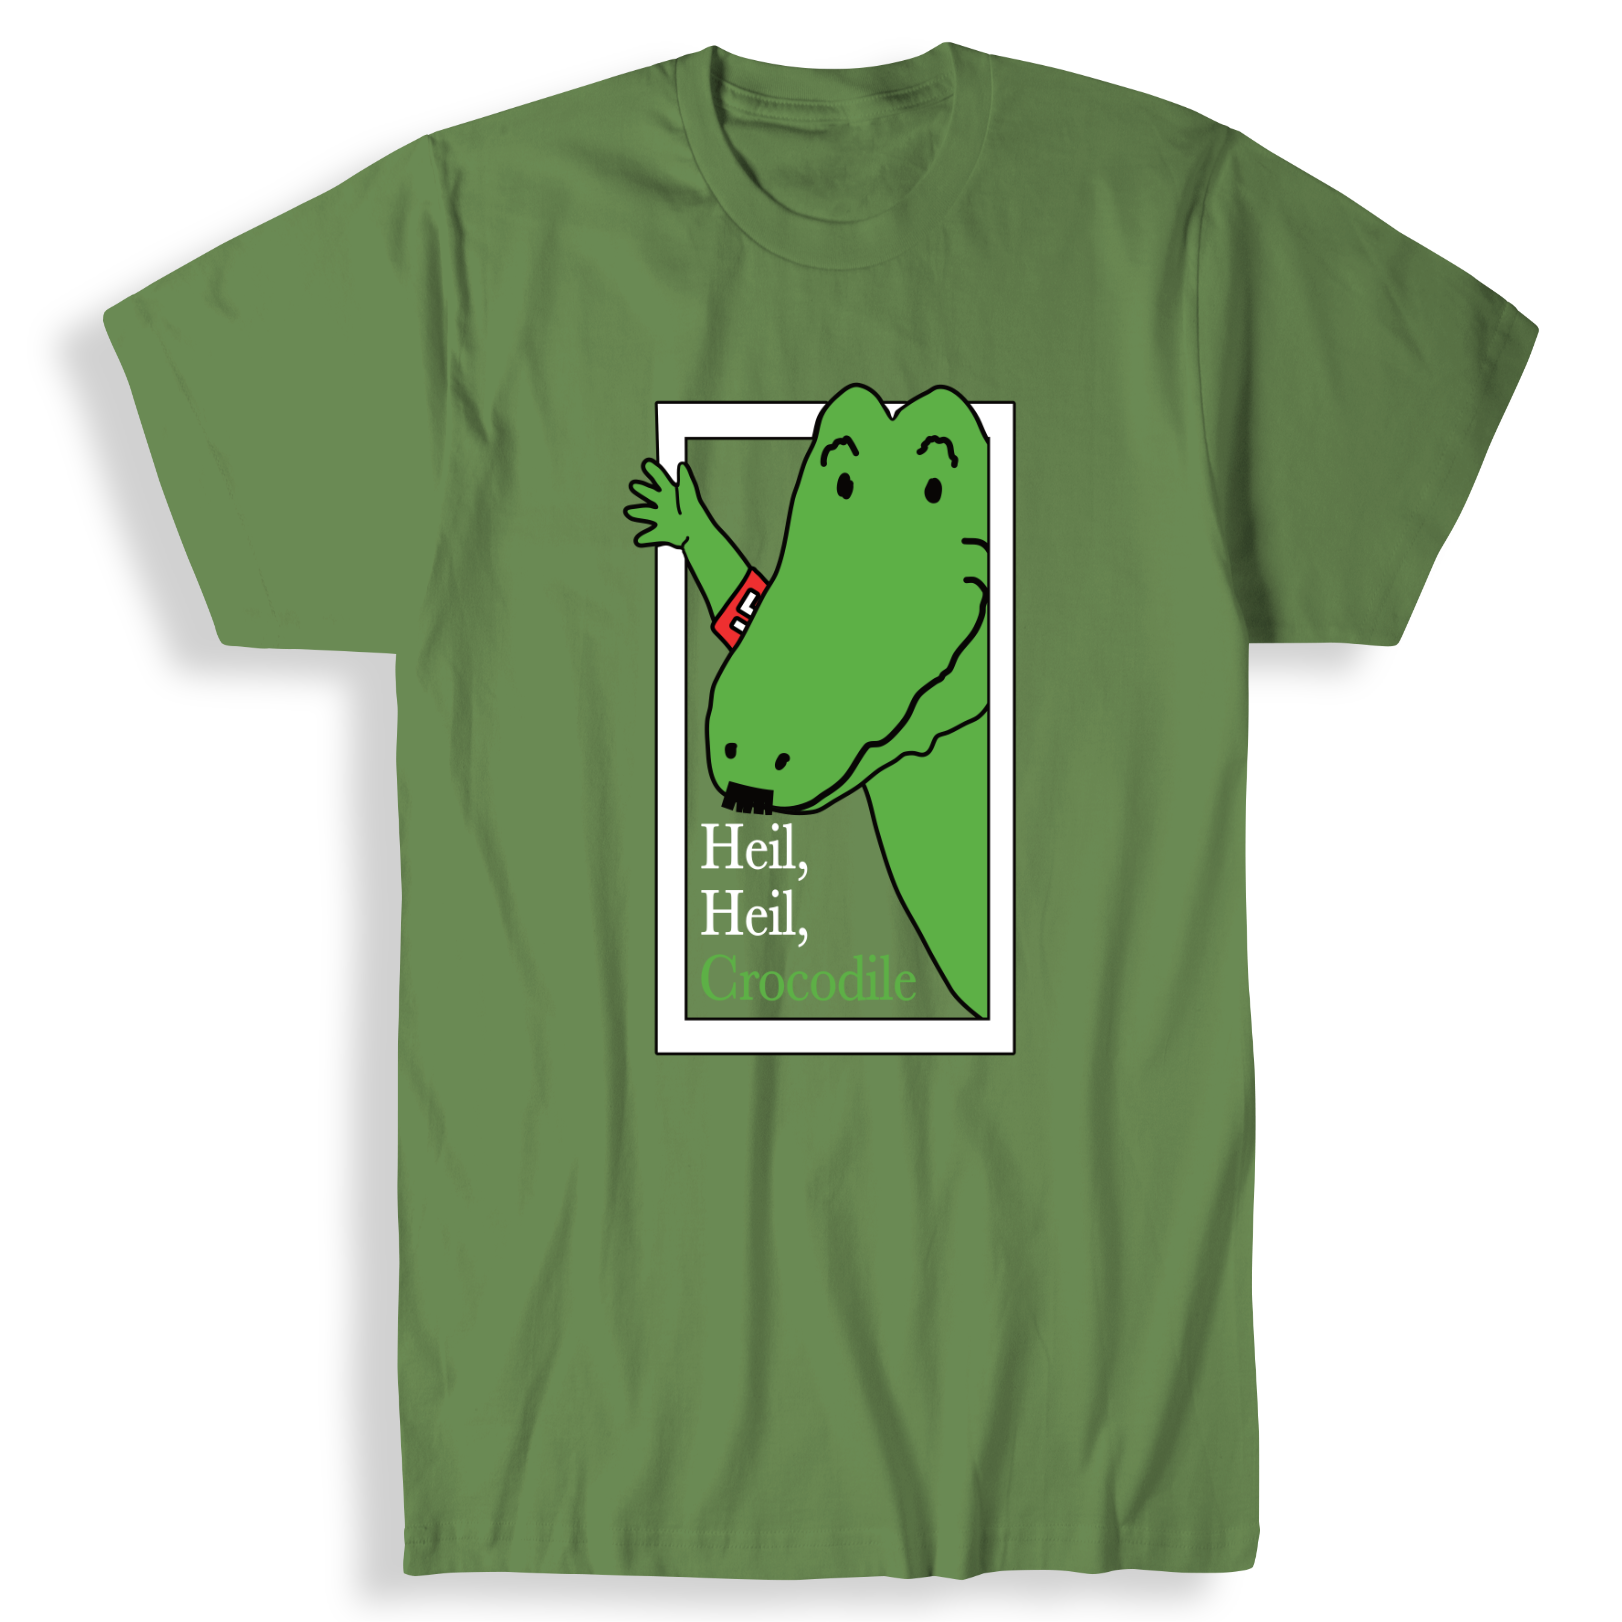 Buy green Heil, Heil, Crocodile T-Shirt